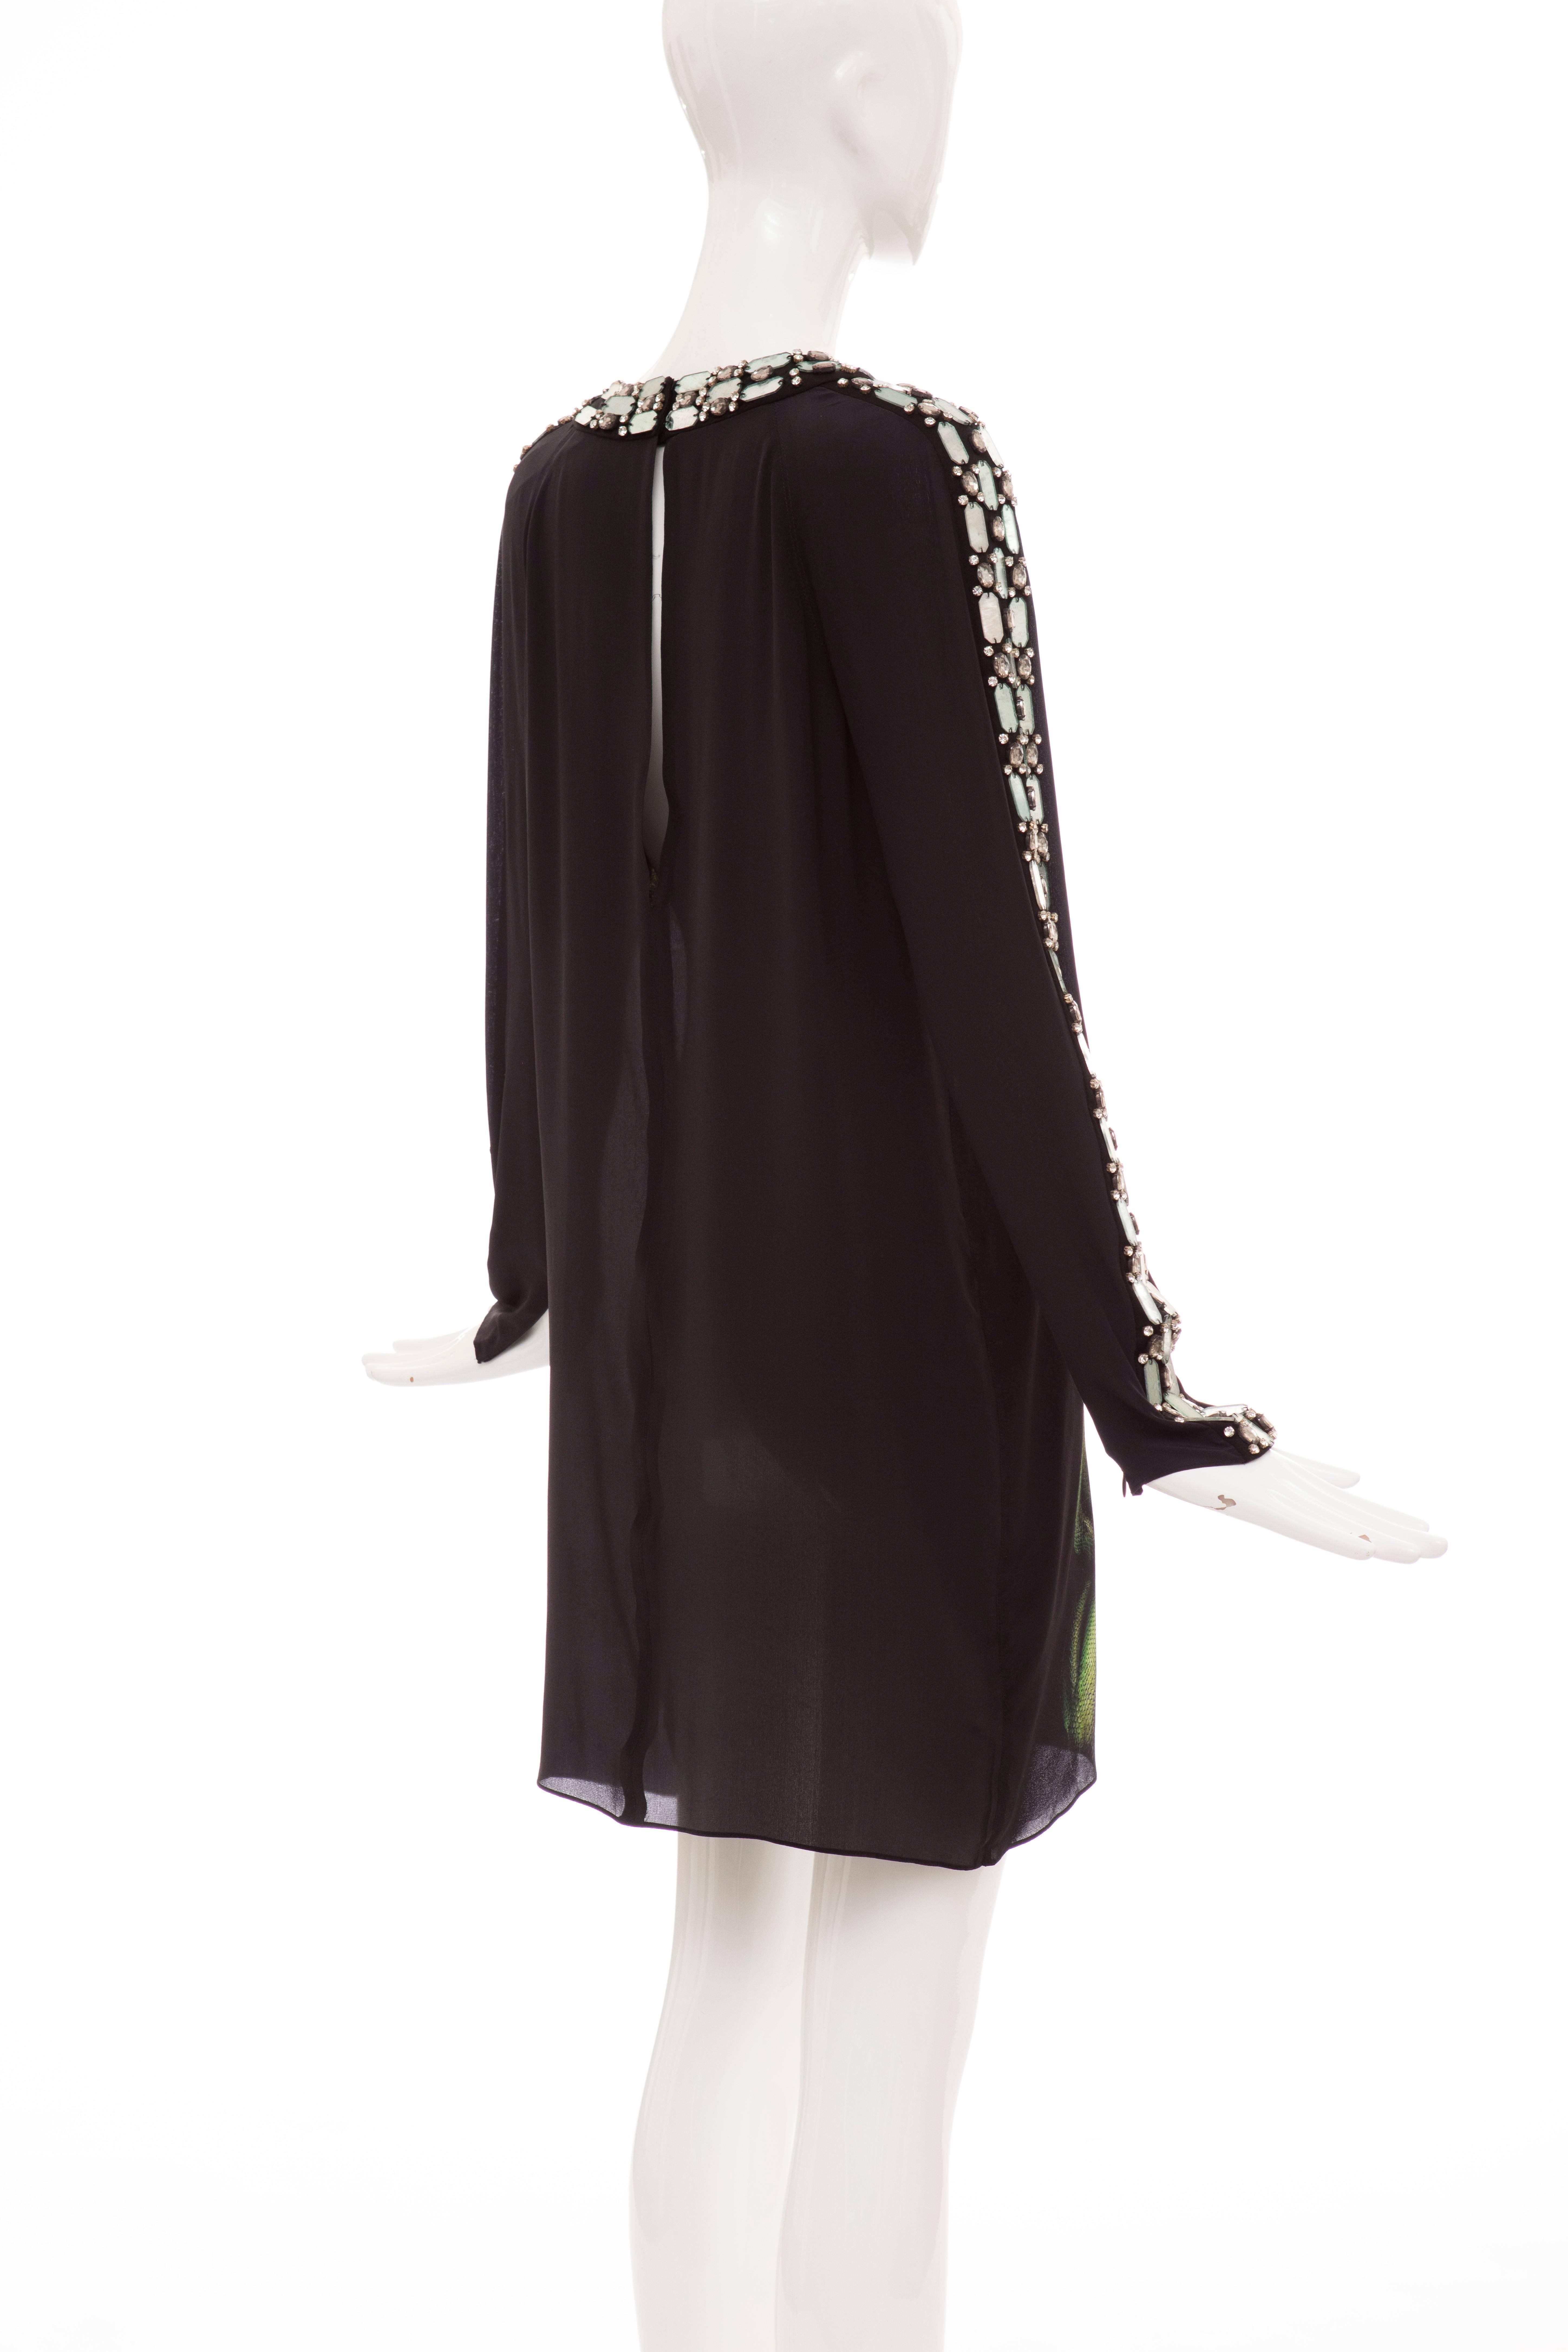 Alber Elbaz for Lanvin Runway Black Silk Python Print Crystal Dress, Spring 2012 3